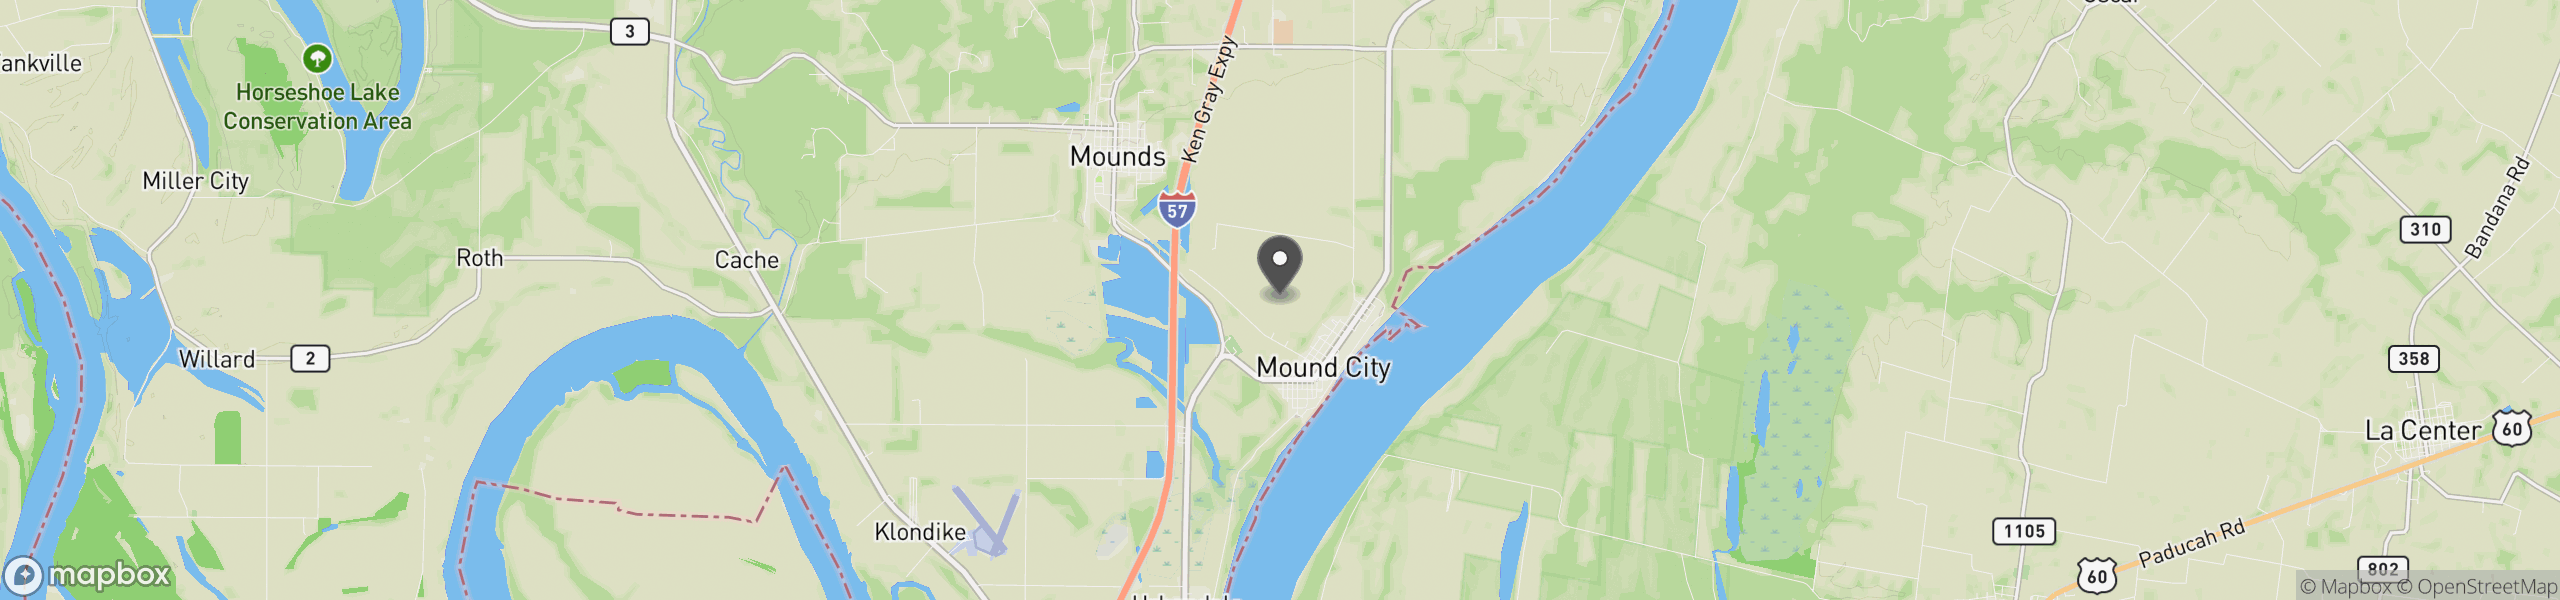 Mound City, IL 62963